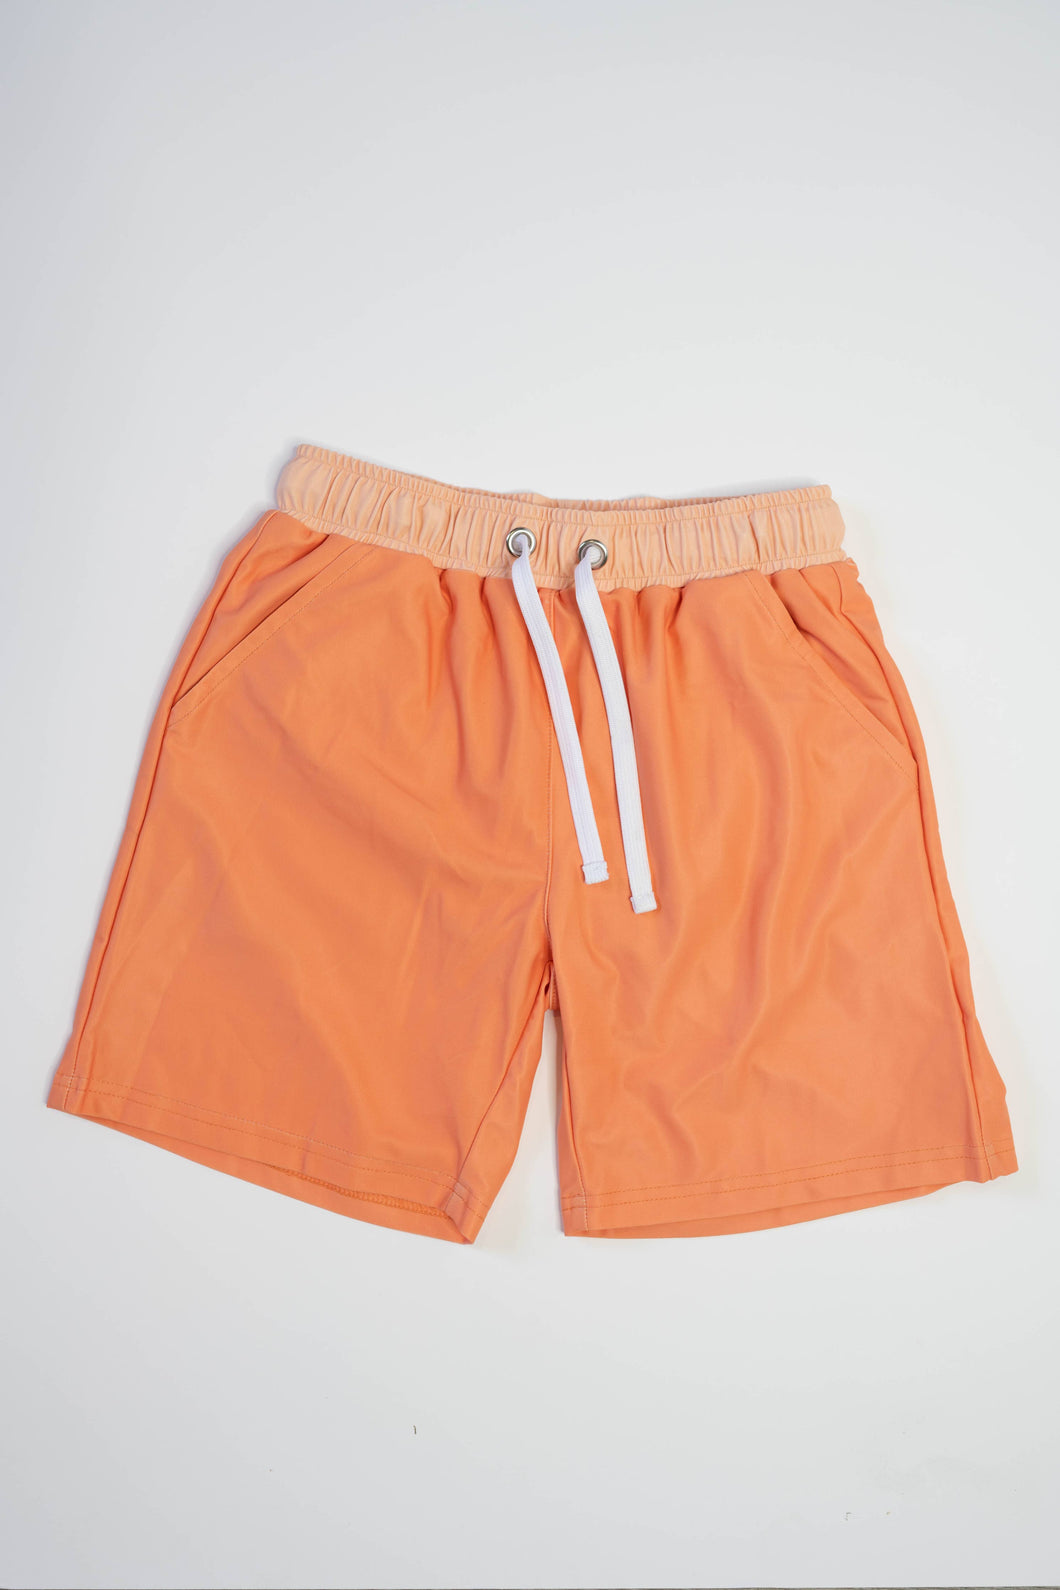 Boy Shorts in Orange Sherbet |  UPF 50 Swimwear + Liner